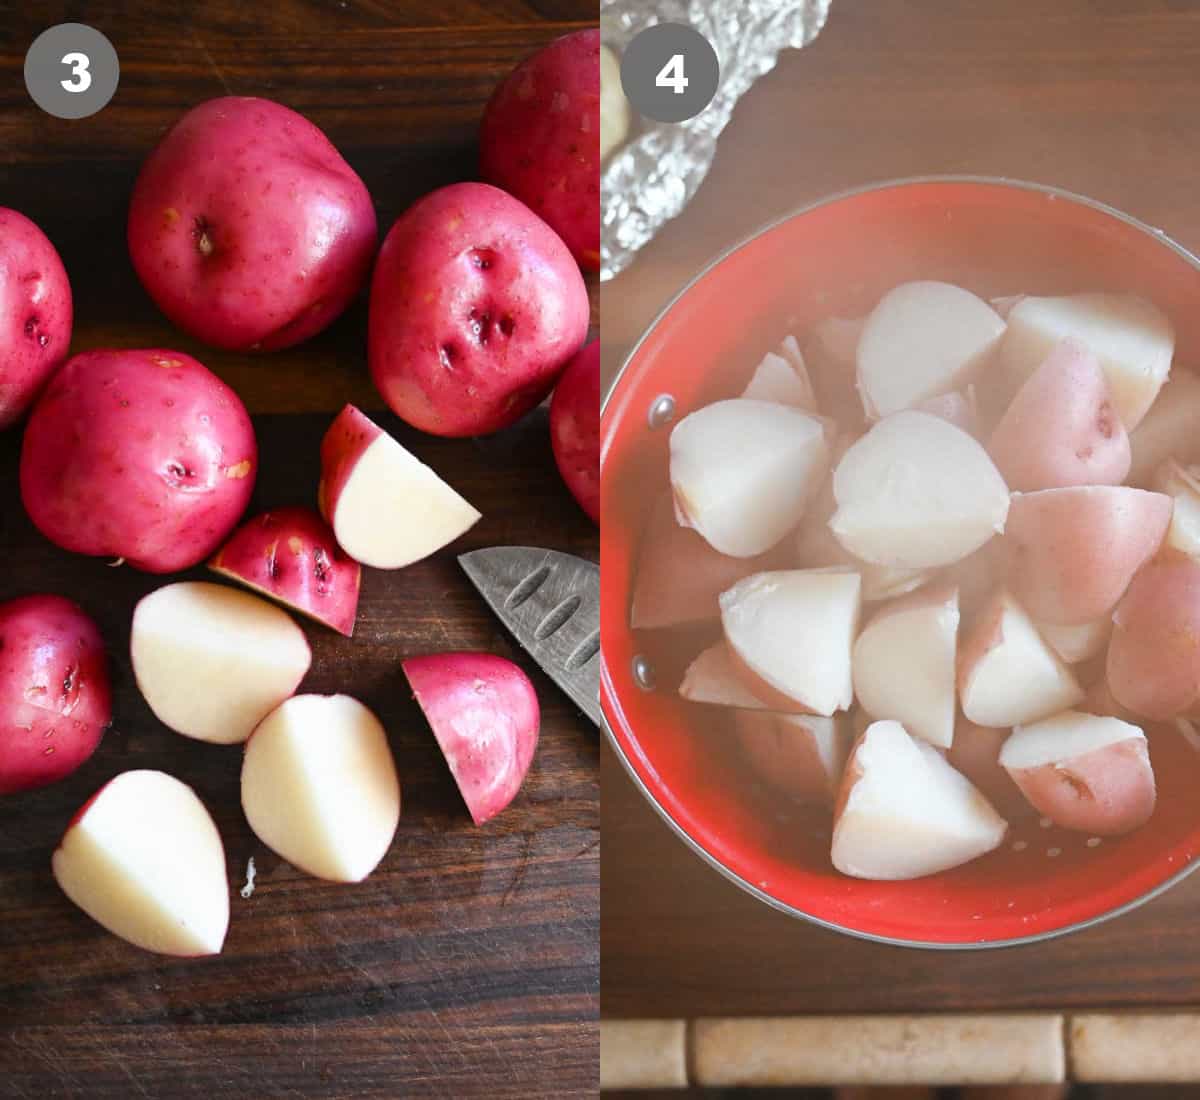 https://butteryourbiscuit.com/wp-content/uploads/2020/10/roasted-garlic-red-potatoes-3.jpg